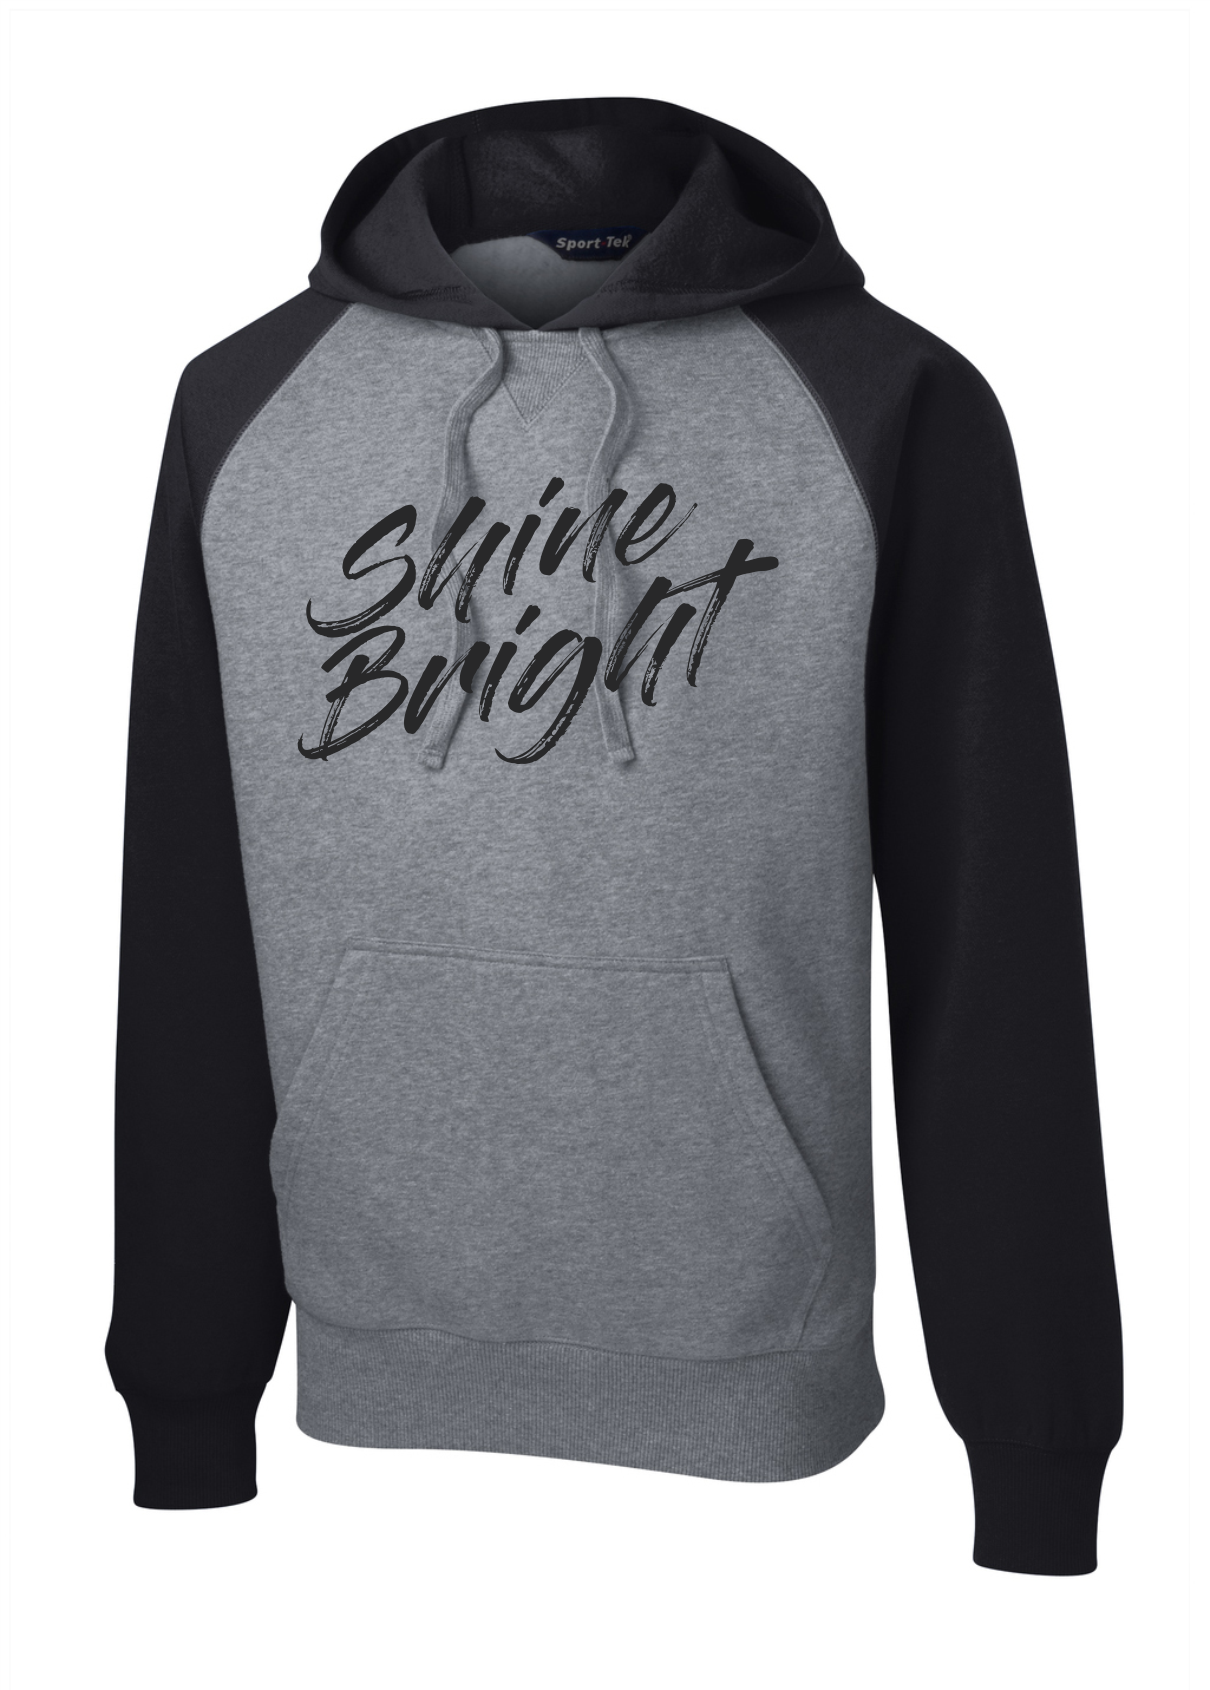 Shine Bright Distressed Vintage Hooded Sweatshirt